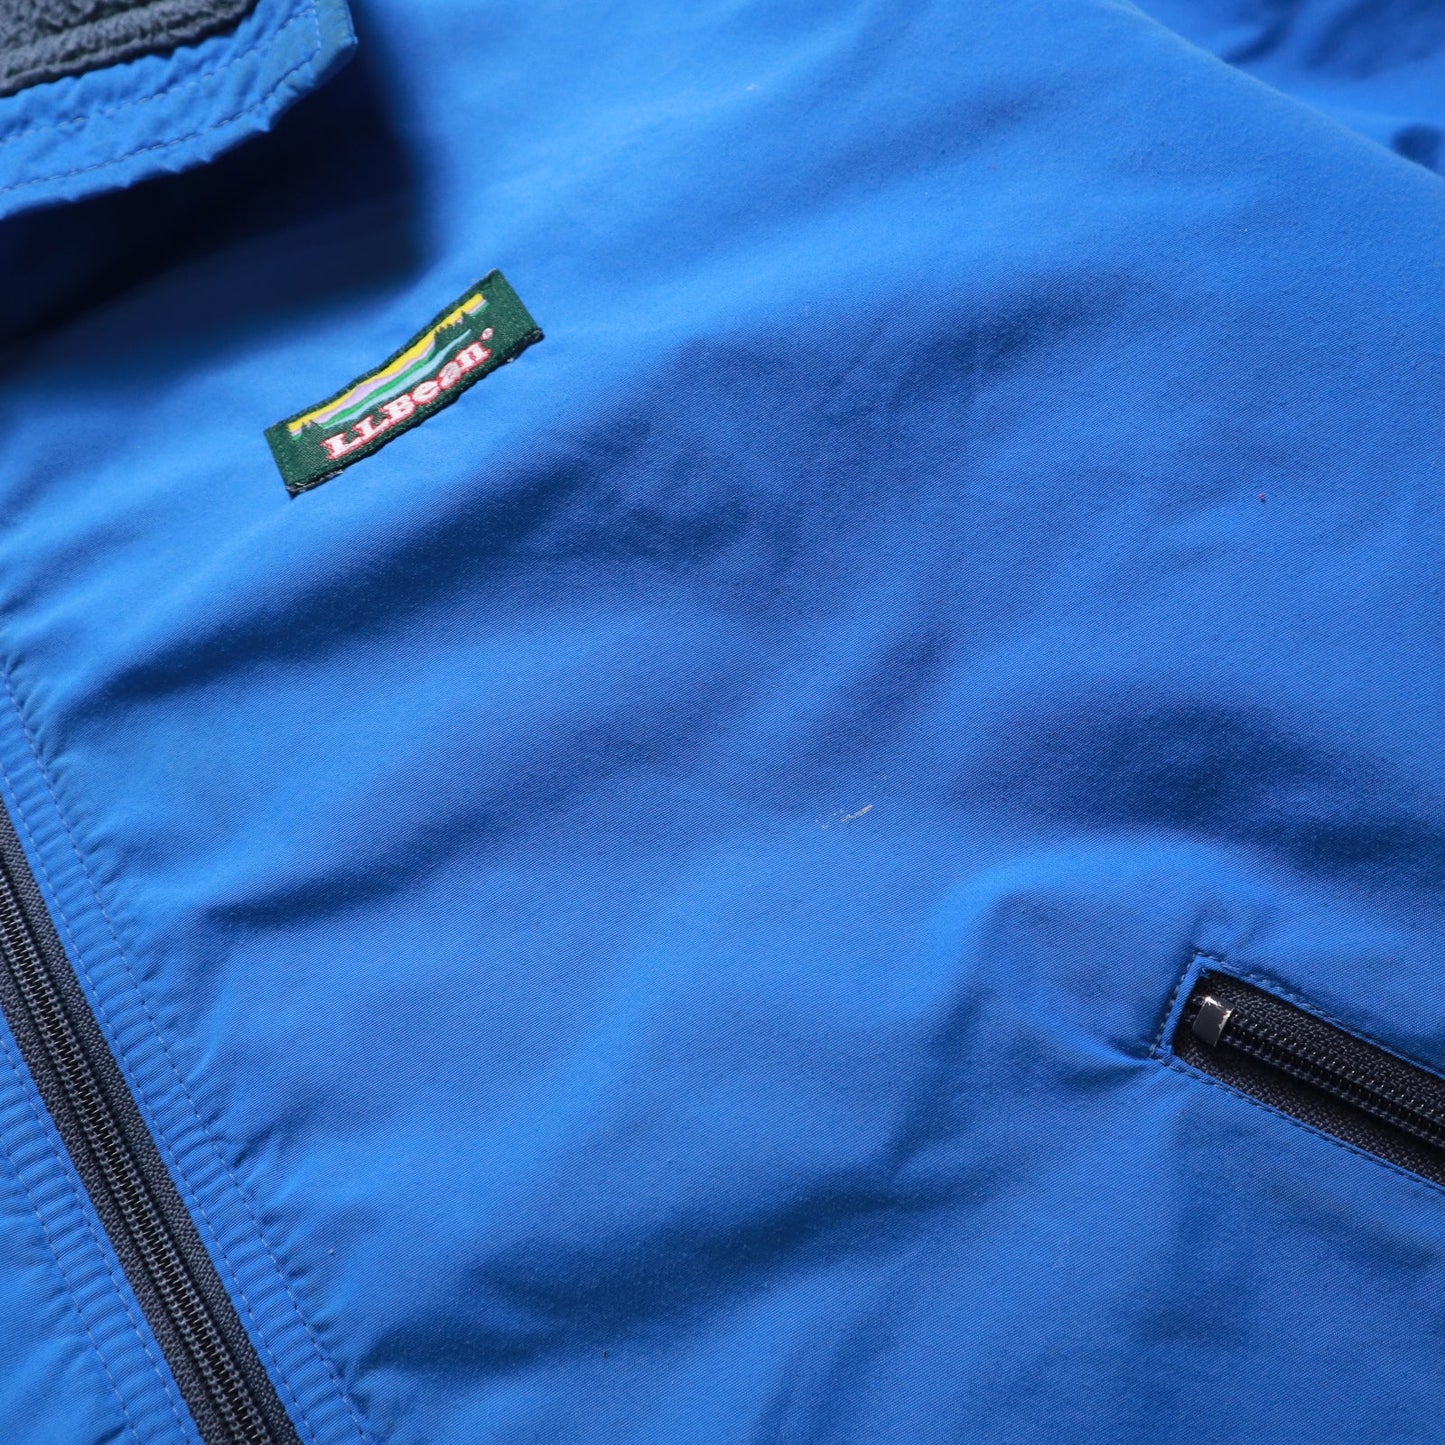 1980s LLBean American-made blue windproof warm jacket Warm up jacket